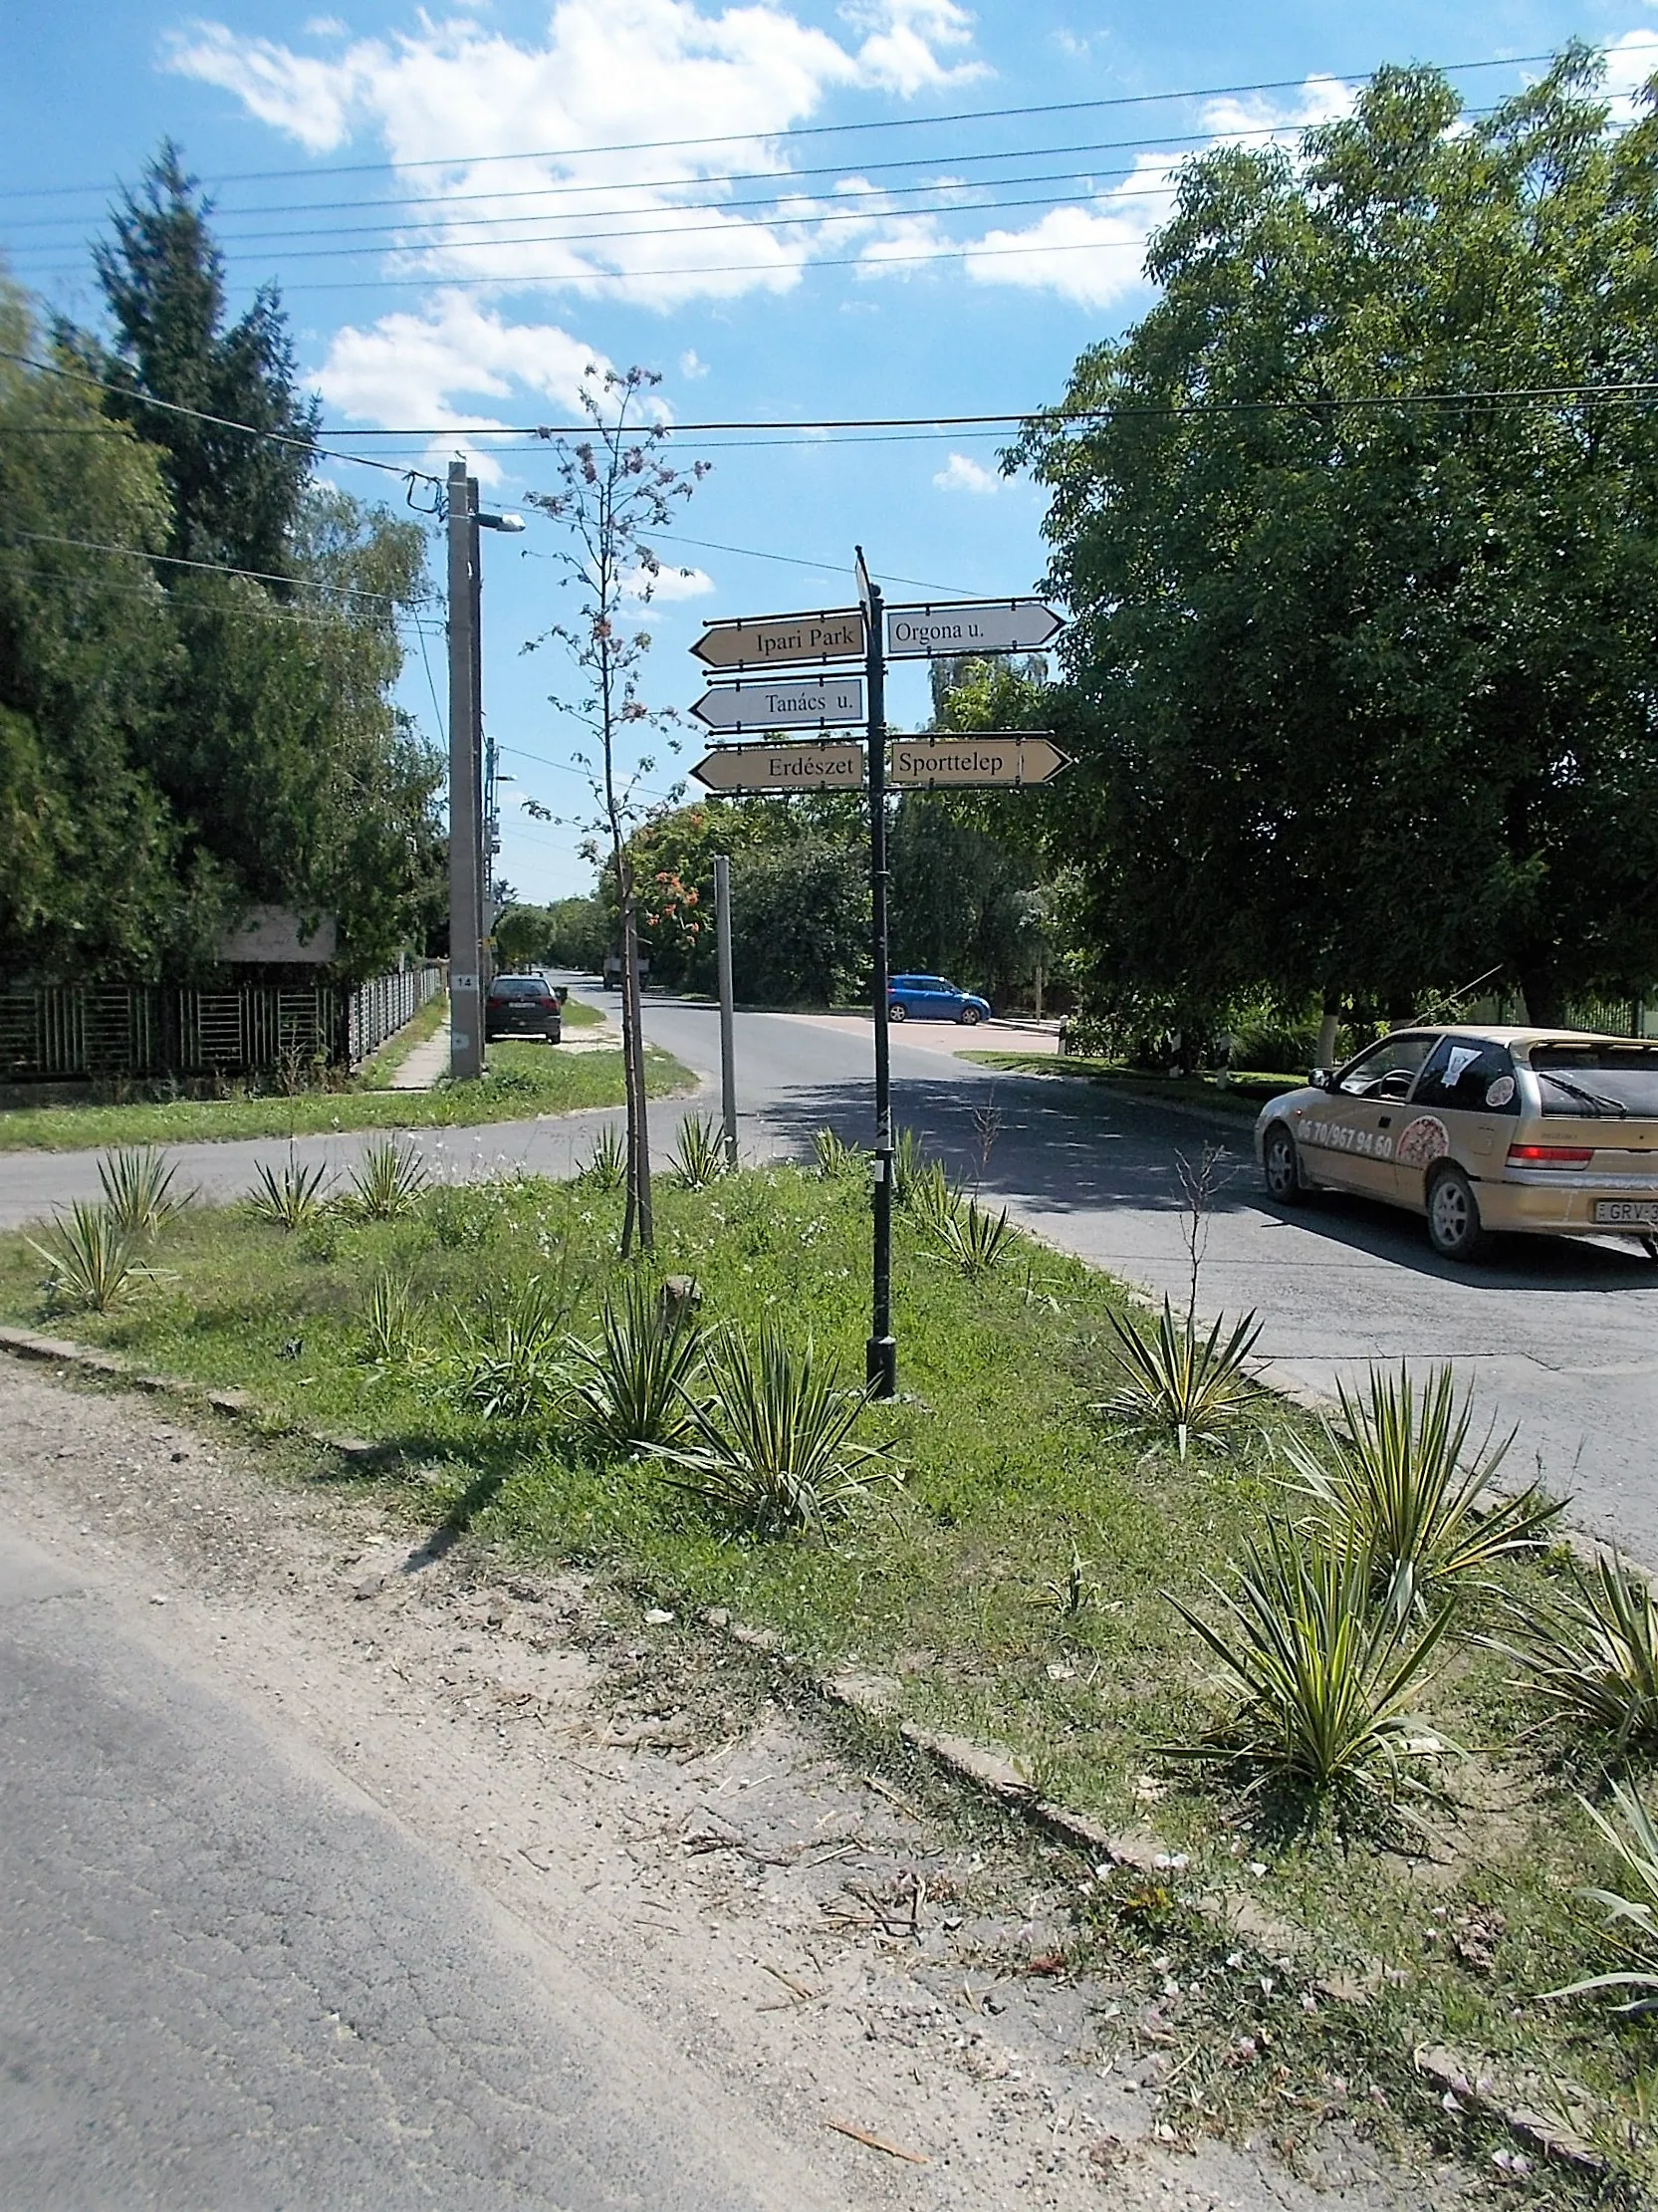 Photo showing: : Fingerpost. - Dömsödi út and Erdész utca corner, Újtelep neighborhood, Ráckeve, Pest County.